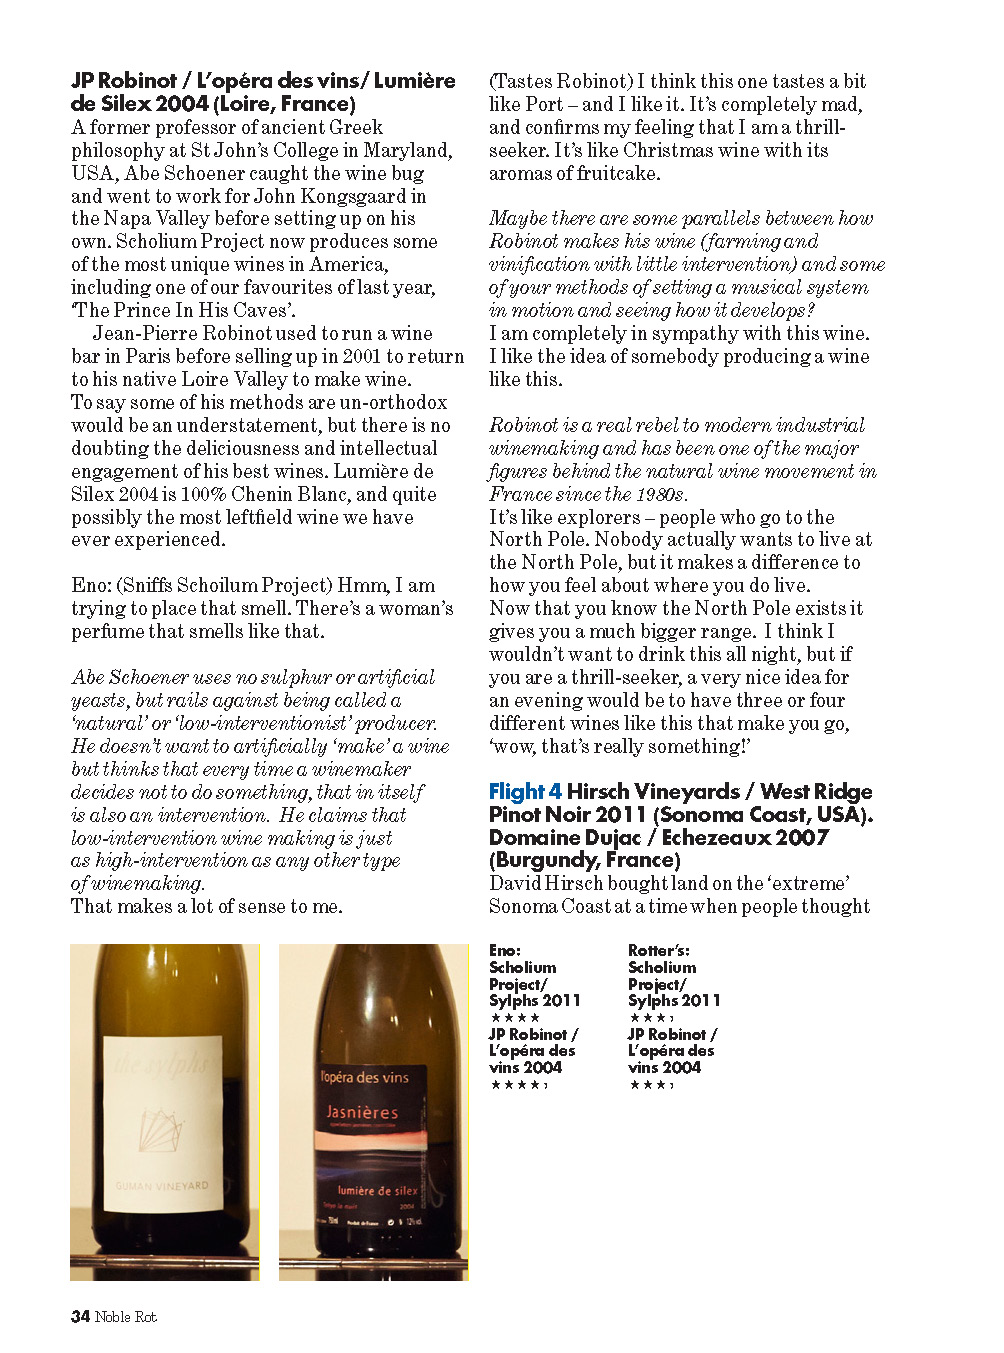 Brian Eno, Noble Rot, Wine Tasting, Magazine, Test Pressing